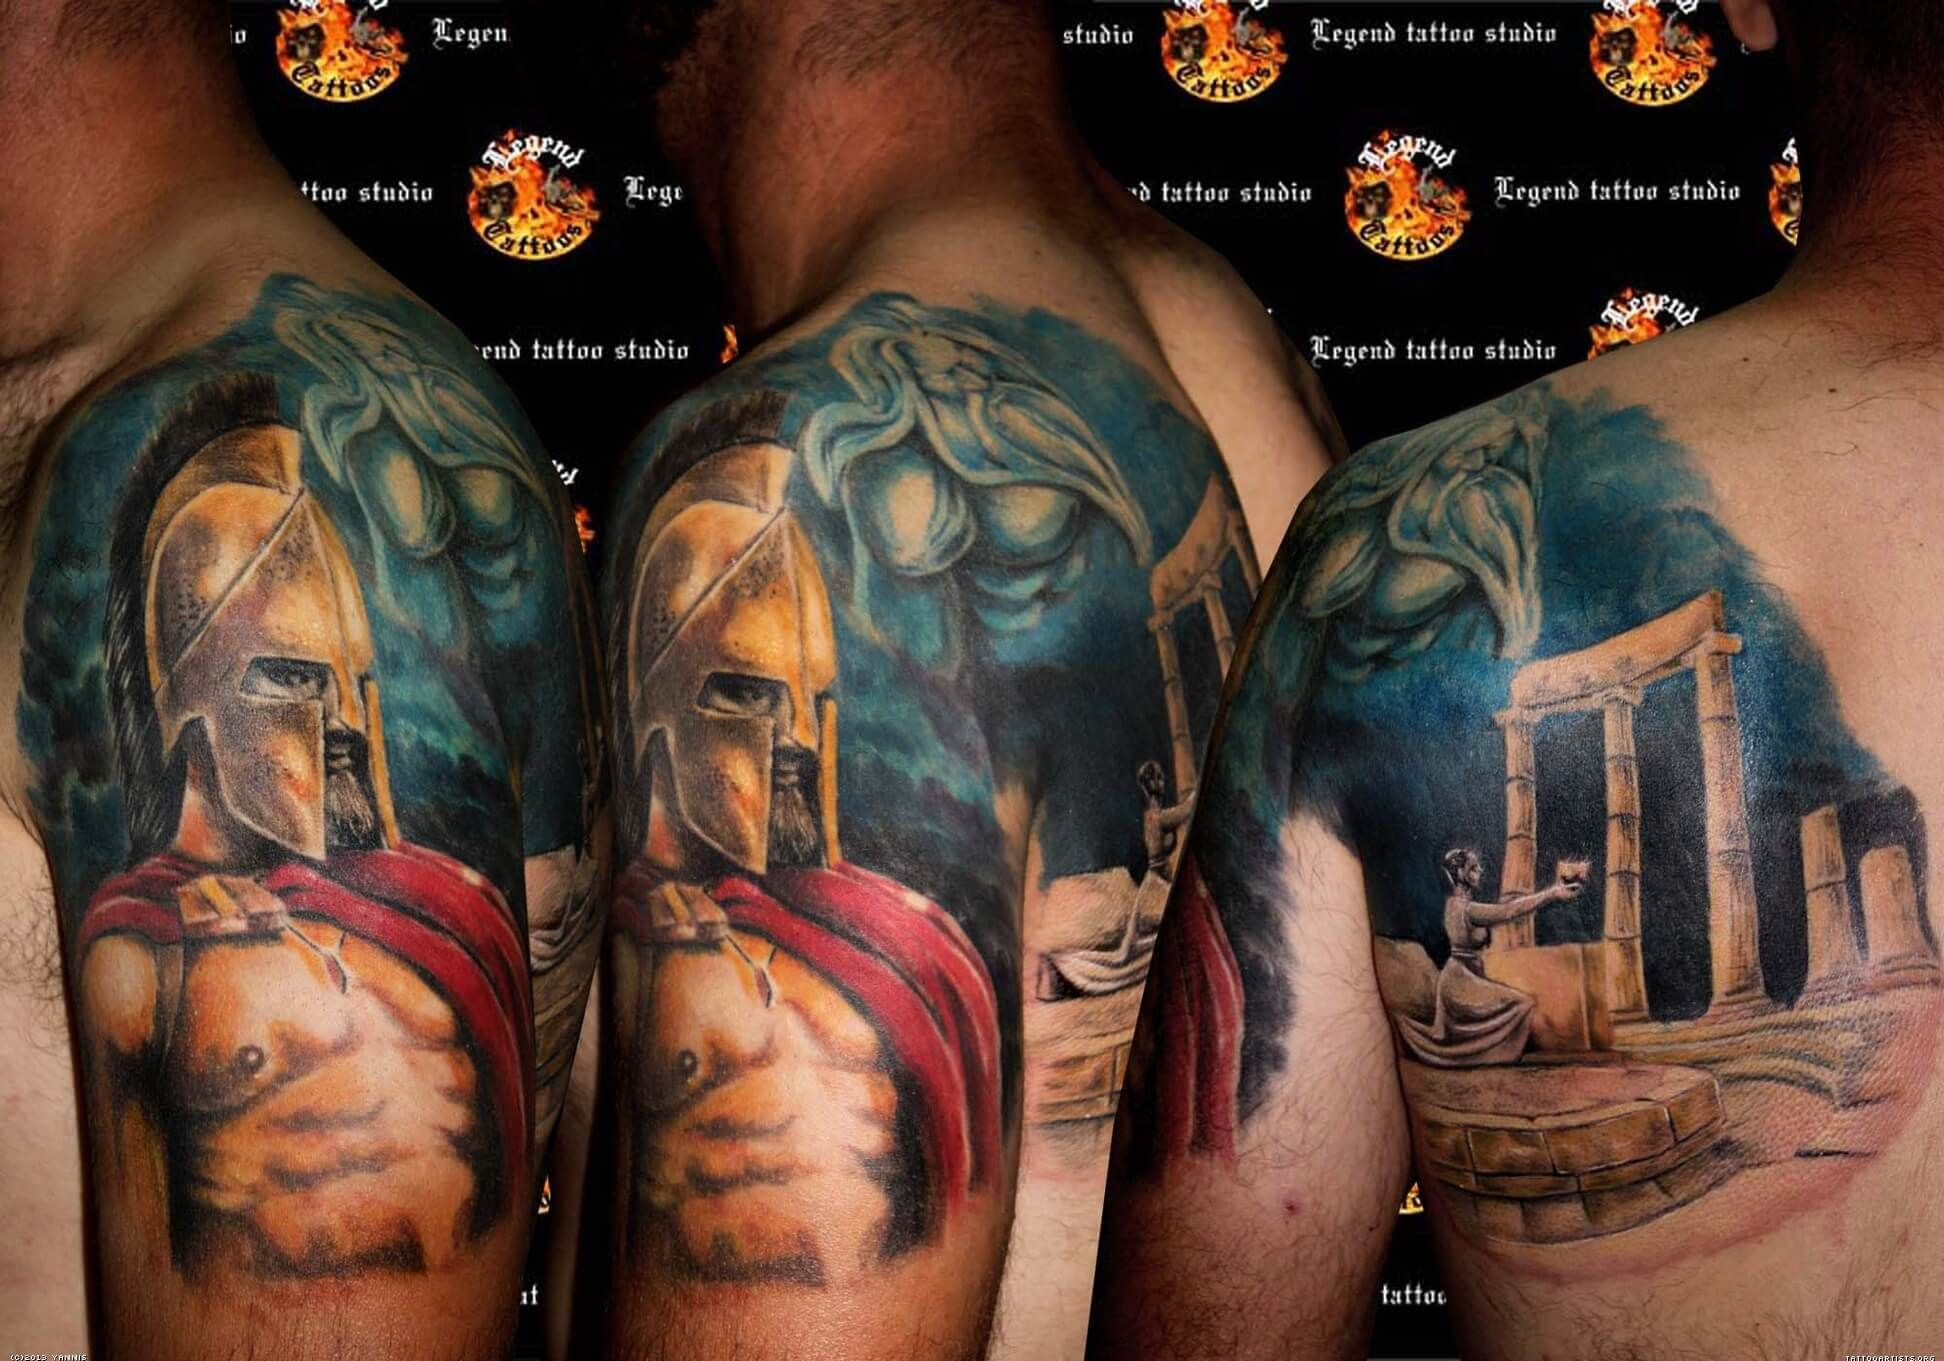 300 Spartan Tattoo Designs And Ideas On Shoulder Arm Mats Tattoo inside dim...